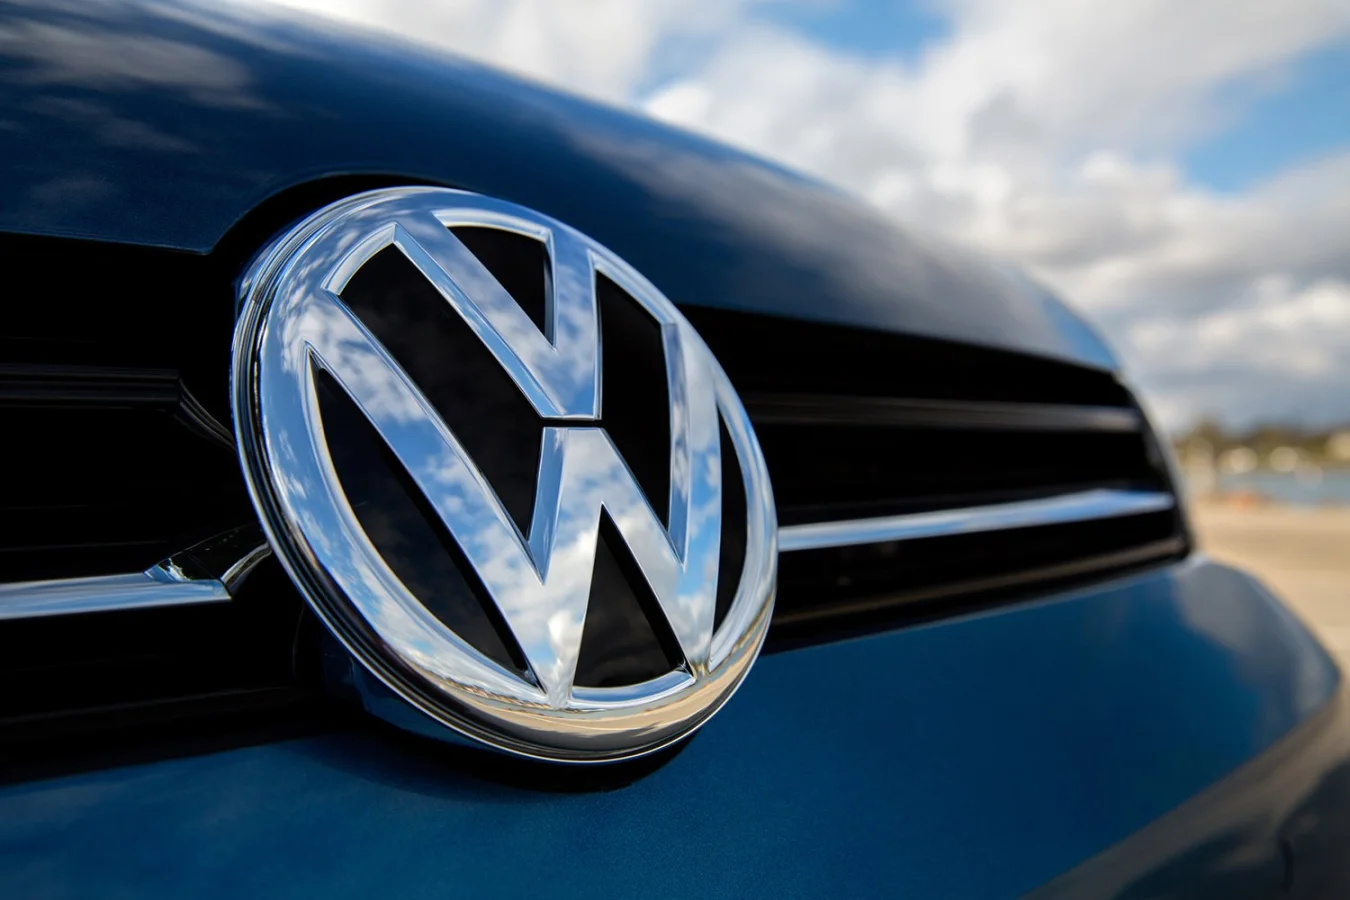 Alman Sendika IG Metall, Volkswagen'den %7 Ücret Artışı Talep Edecek